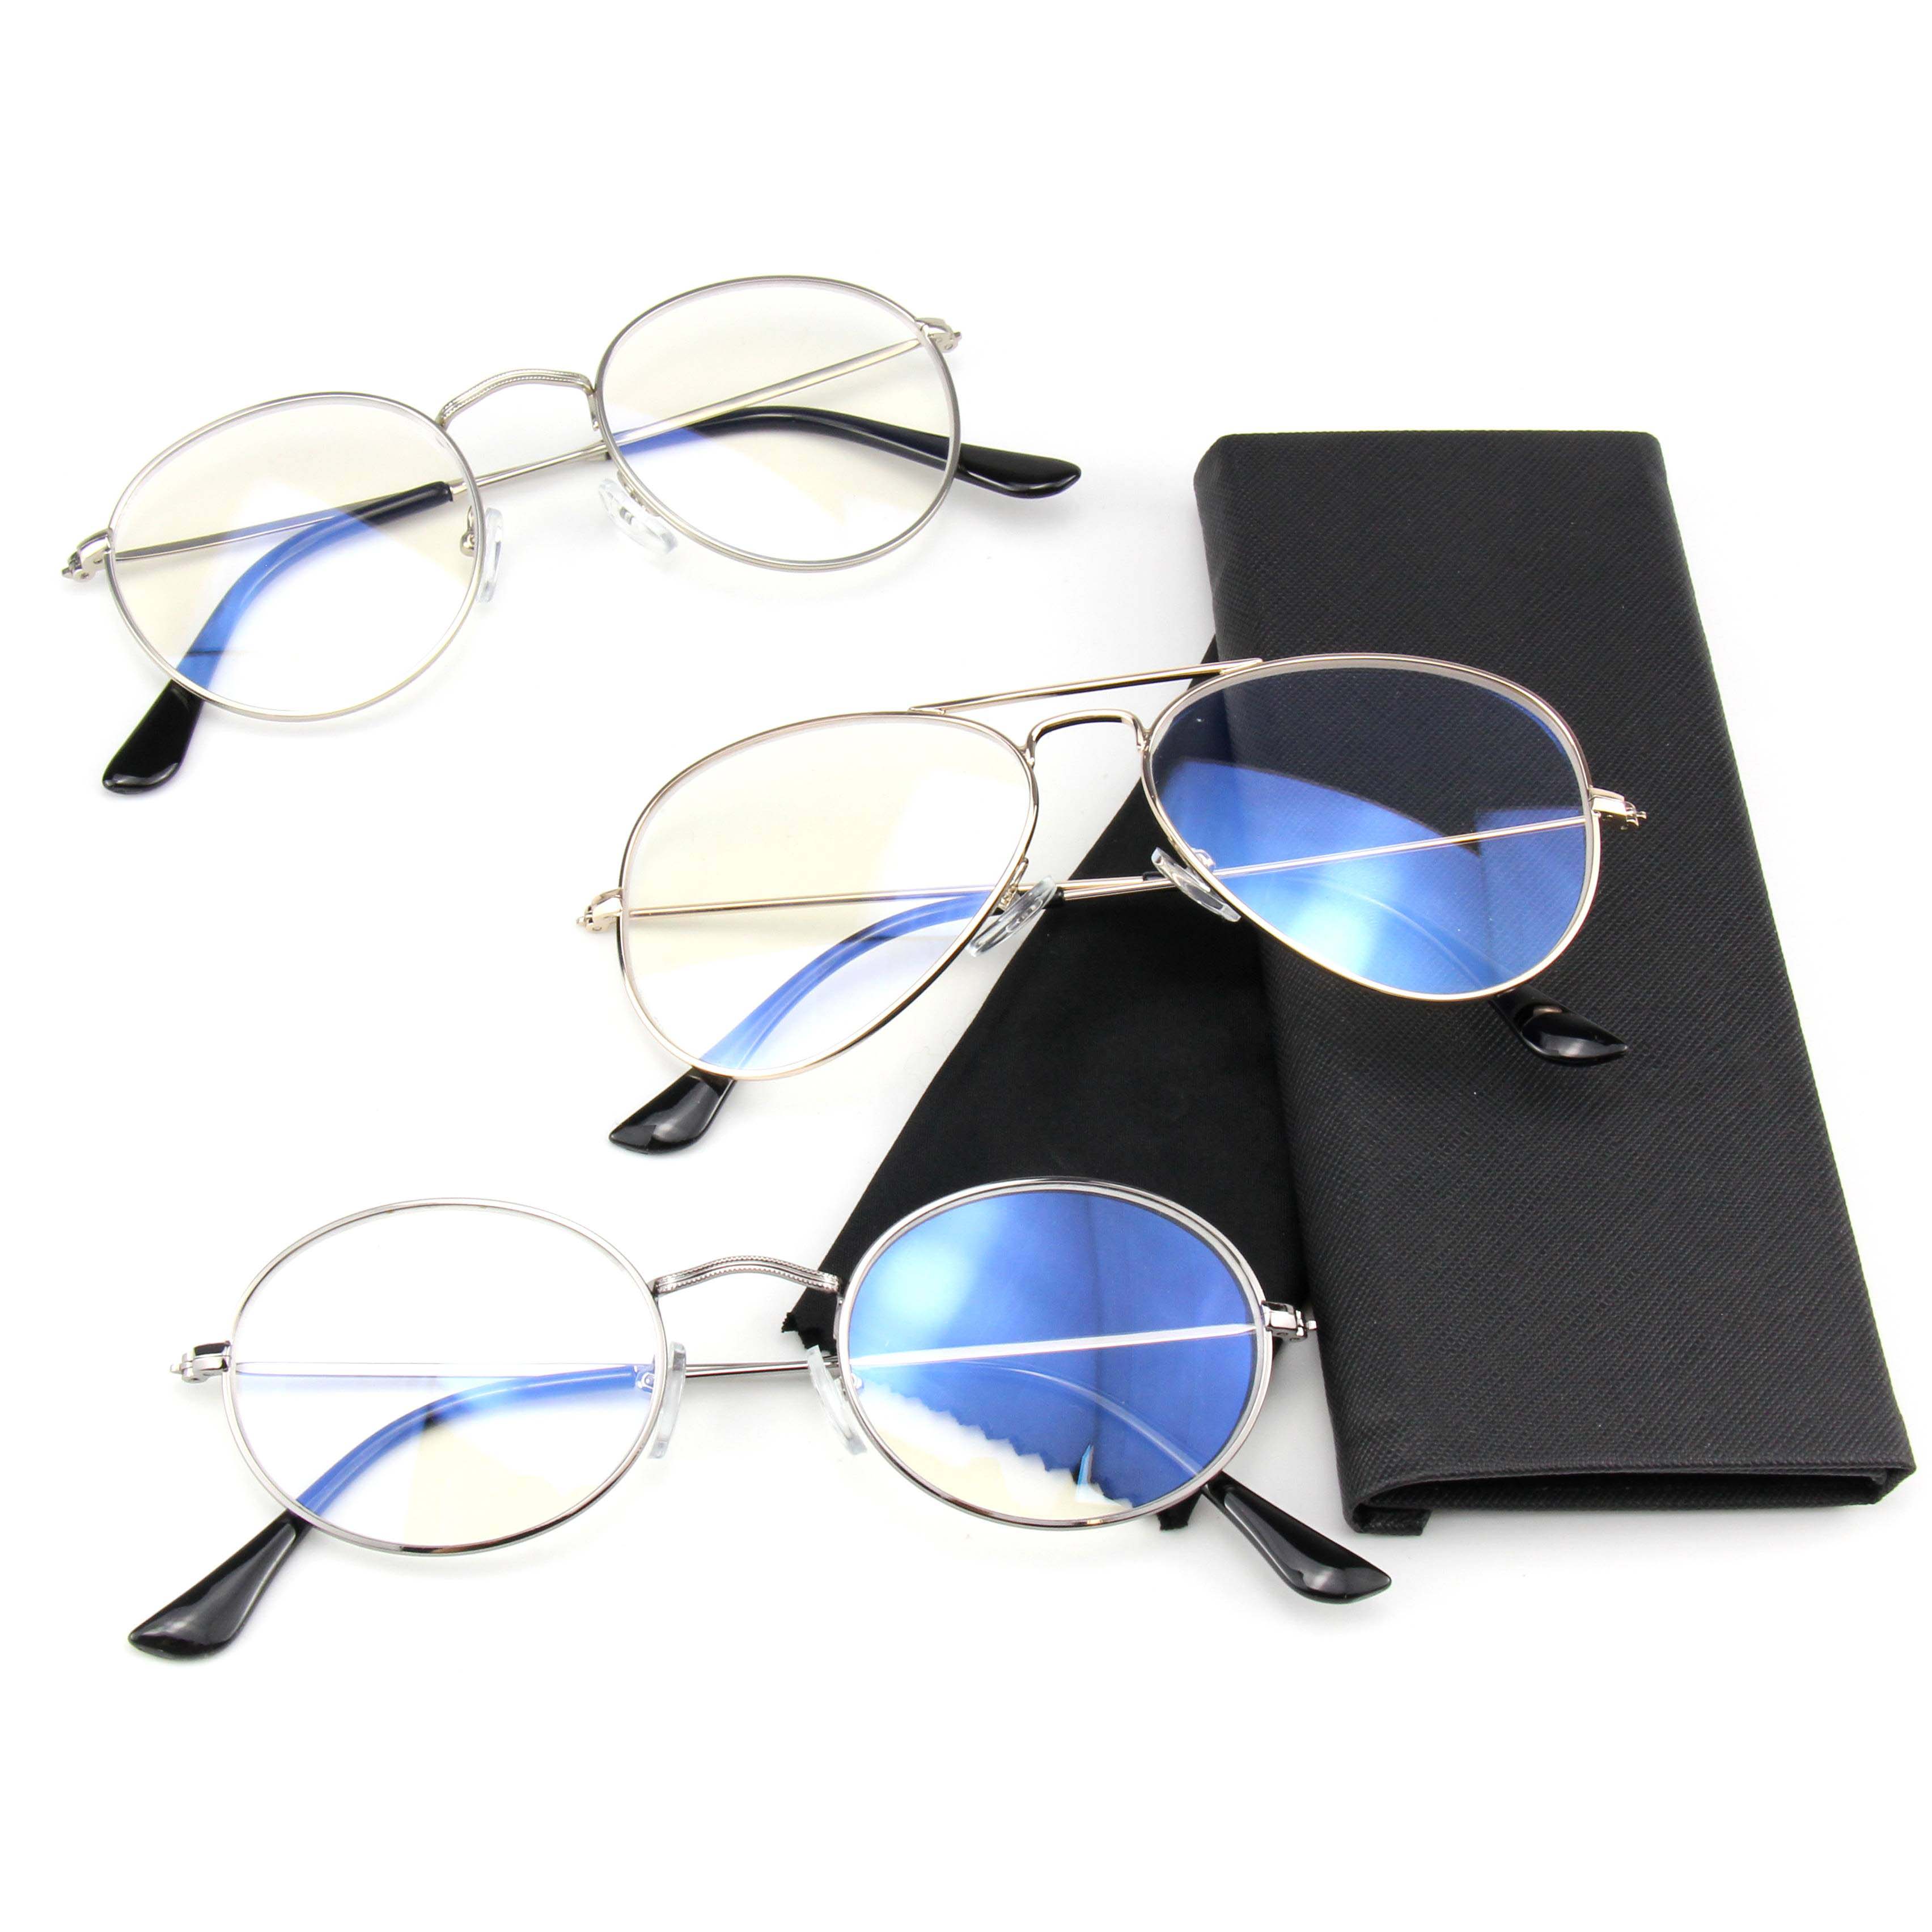 Eugenia optical glasses wholesale overseas market-1